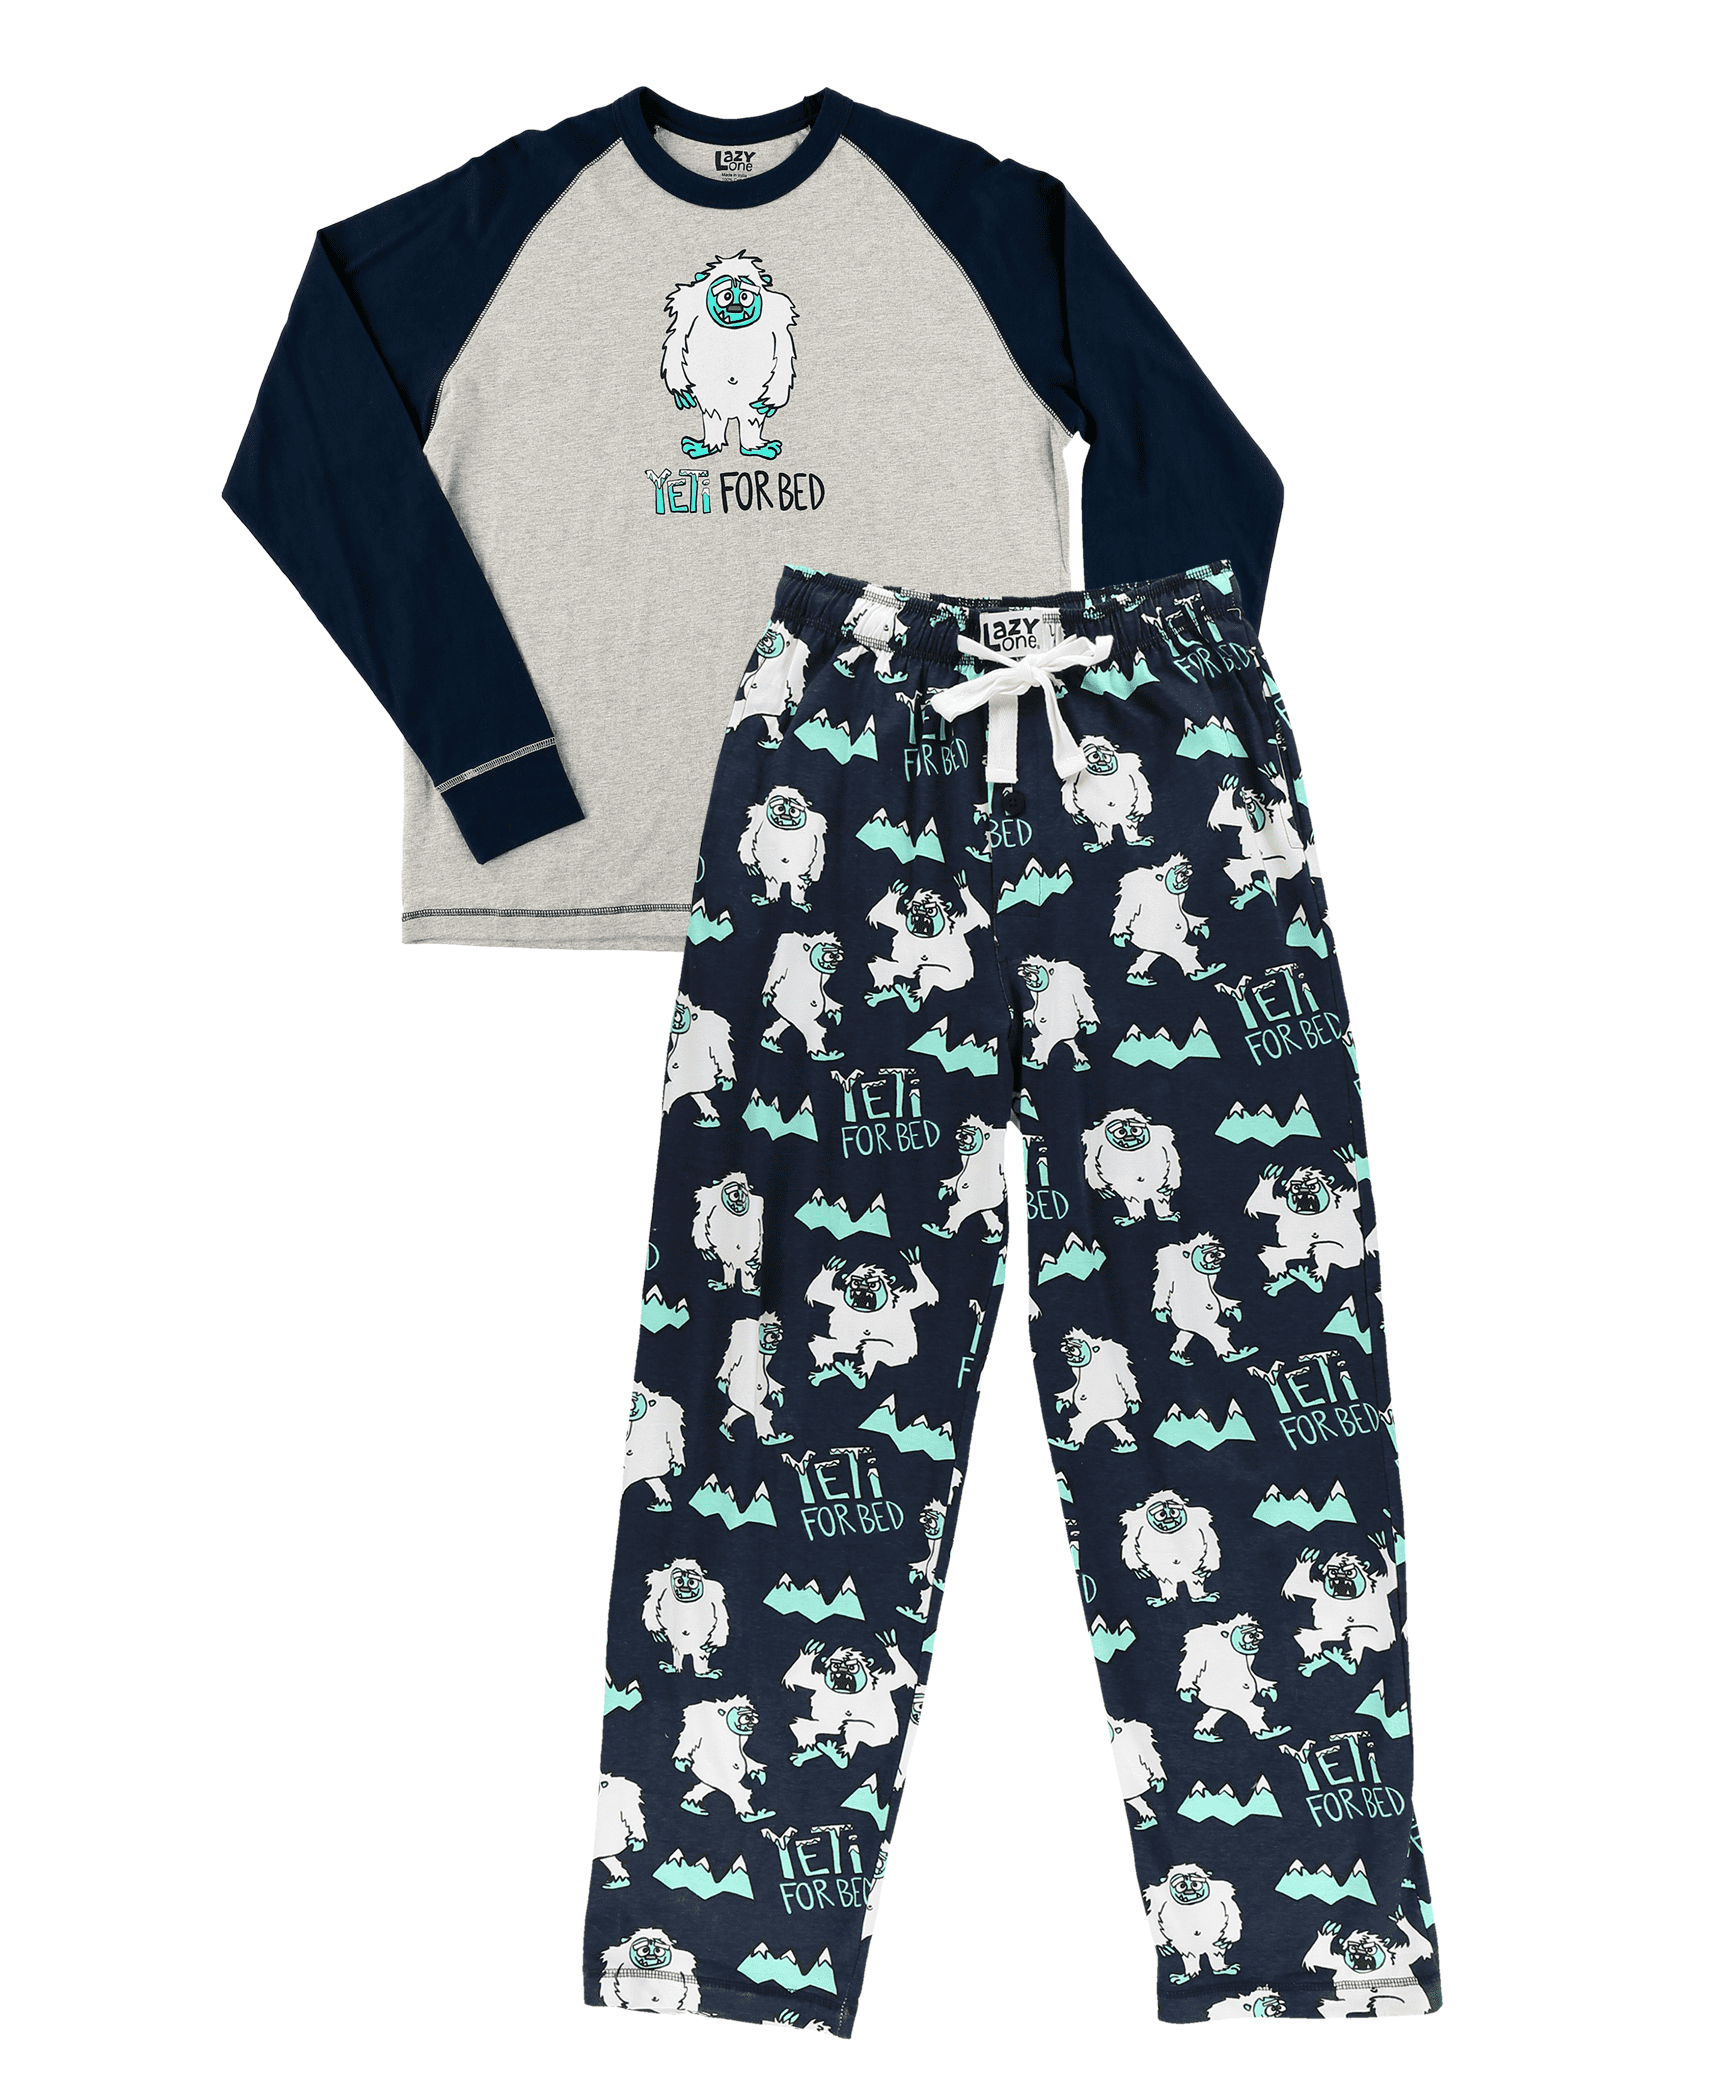 Unique Yeti Christmas Pajamas For A Family Green - Family